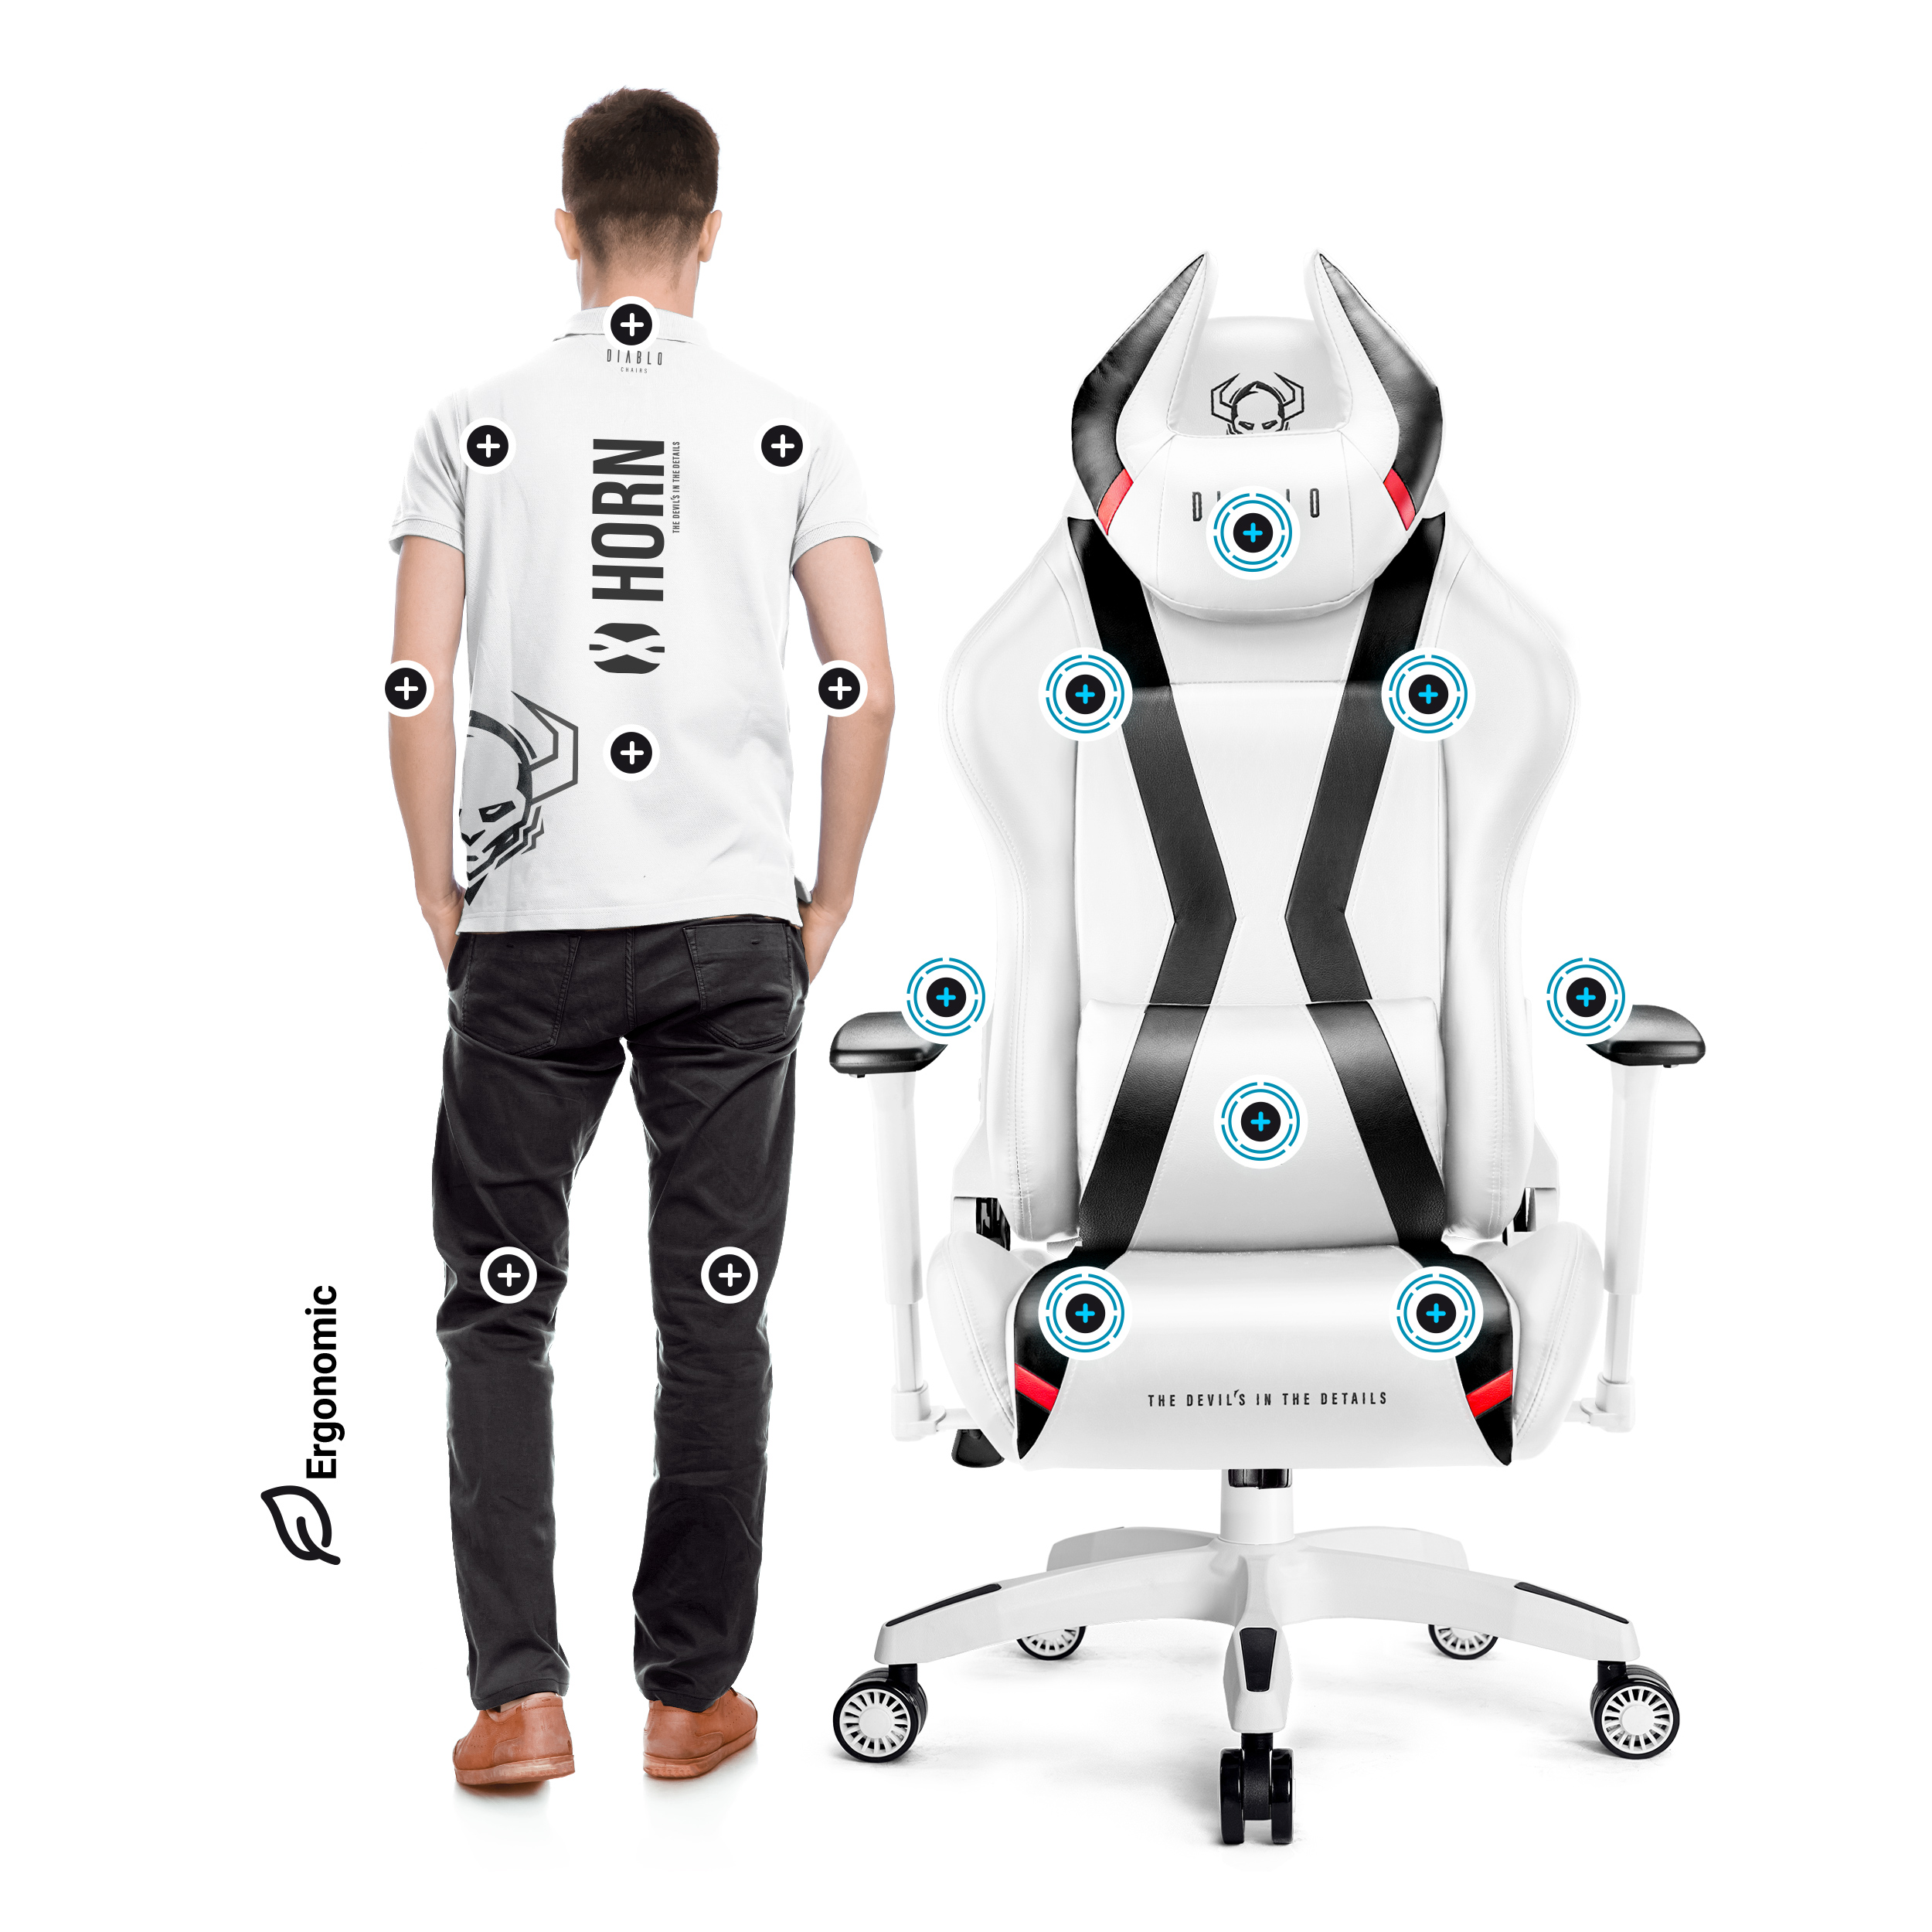 DIABLO CHAIRS GAMING KING STUHL X-HORN Gaming white 2.0 Chair